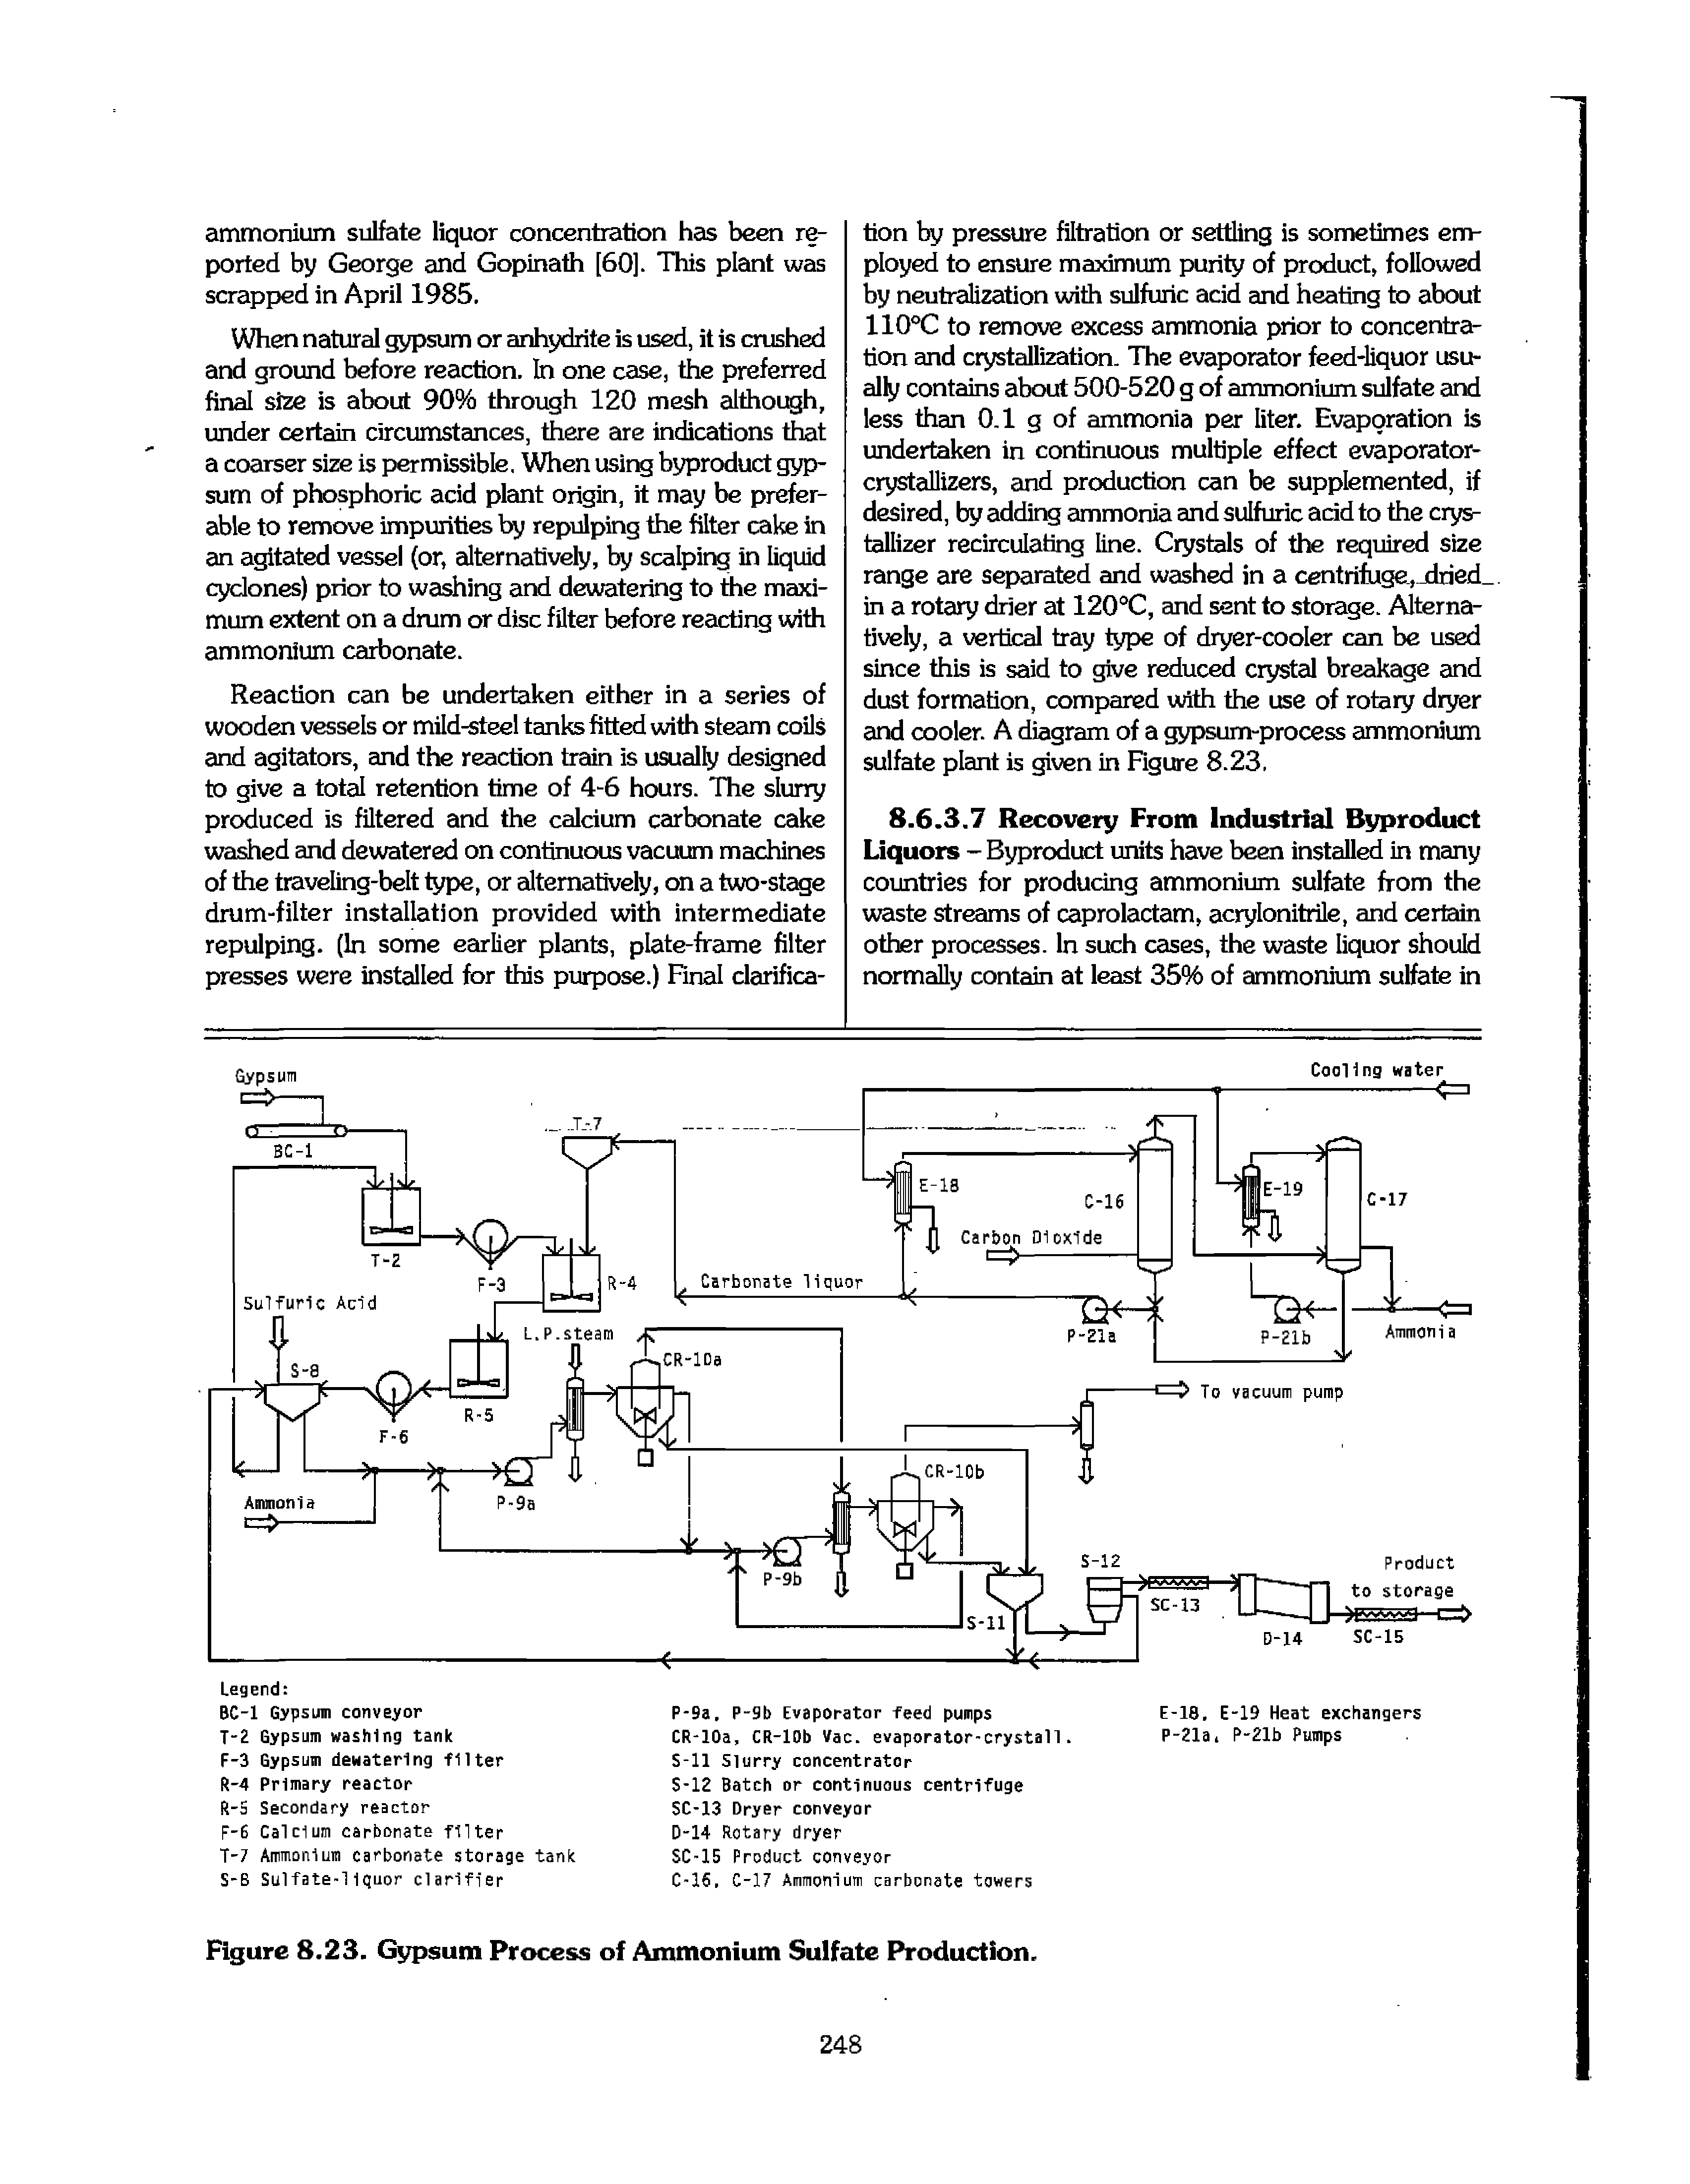 Figure 8.23. Gypsum Process of Ammonium Sulfate Production.